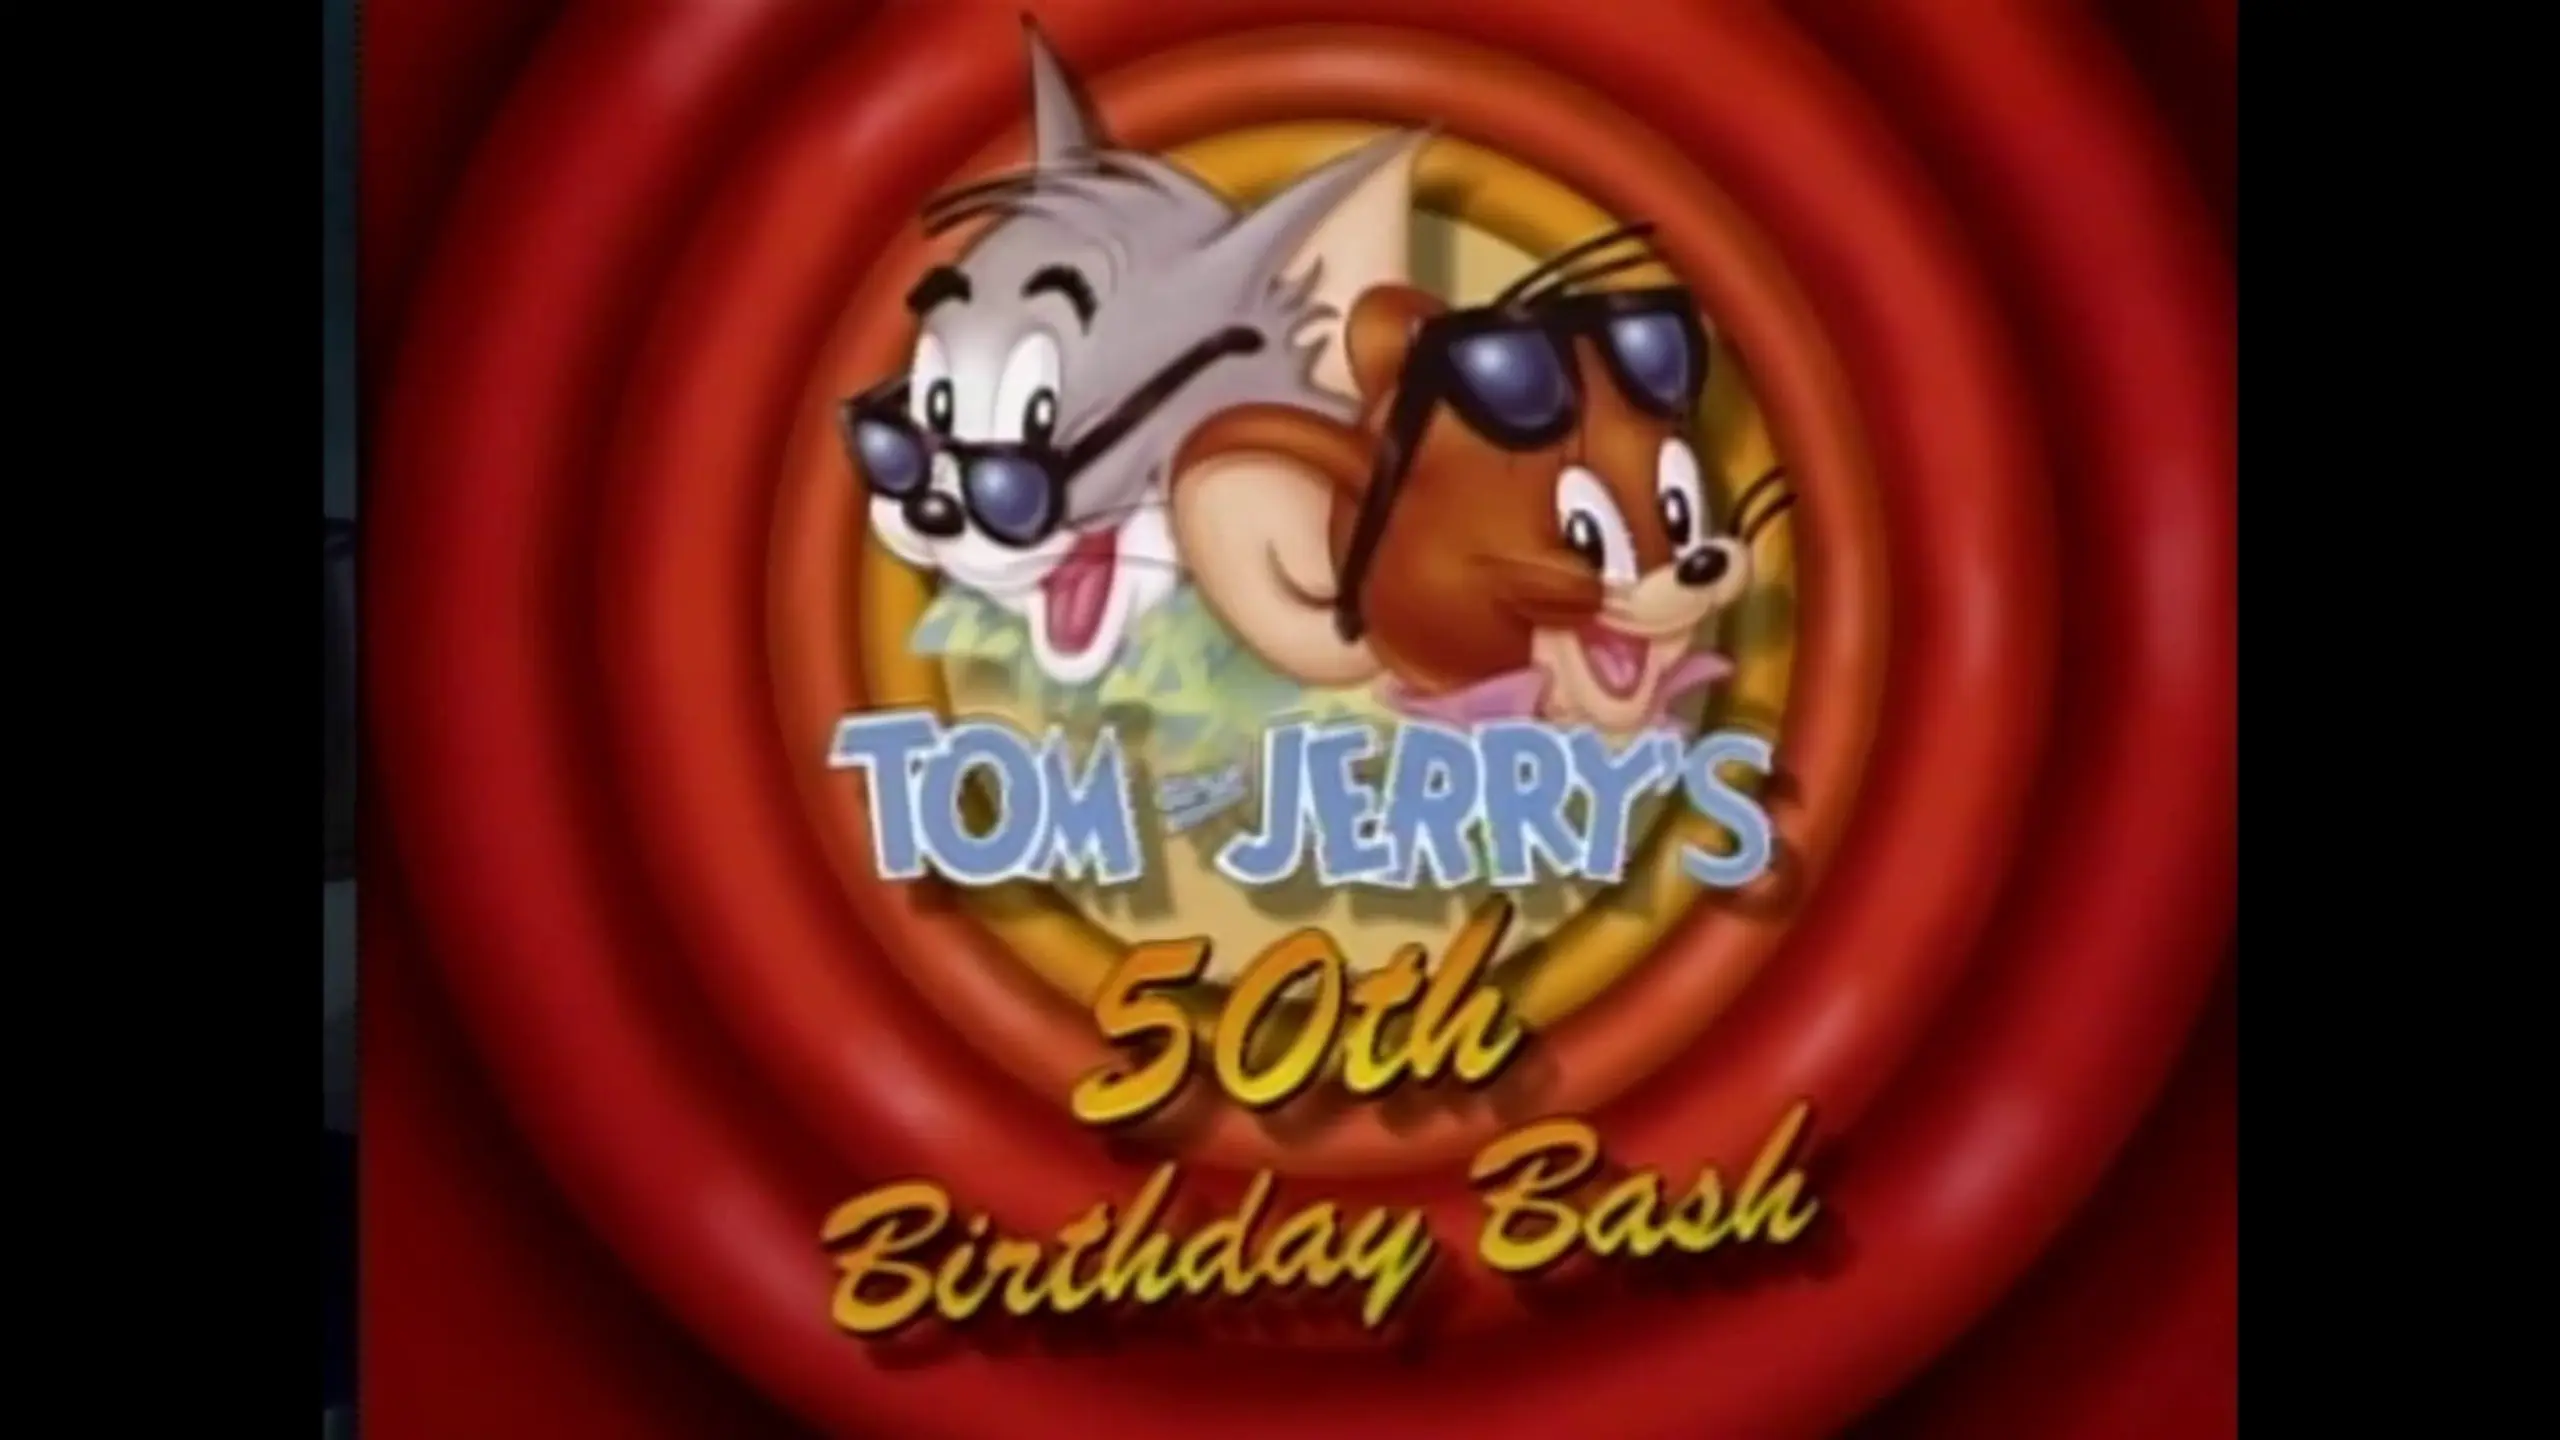 Tom & Jerry's 50th Birthday Bash